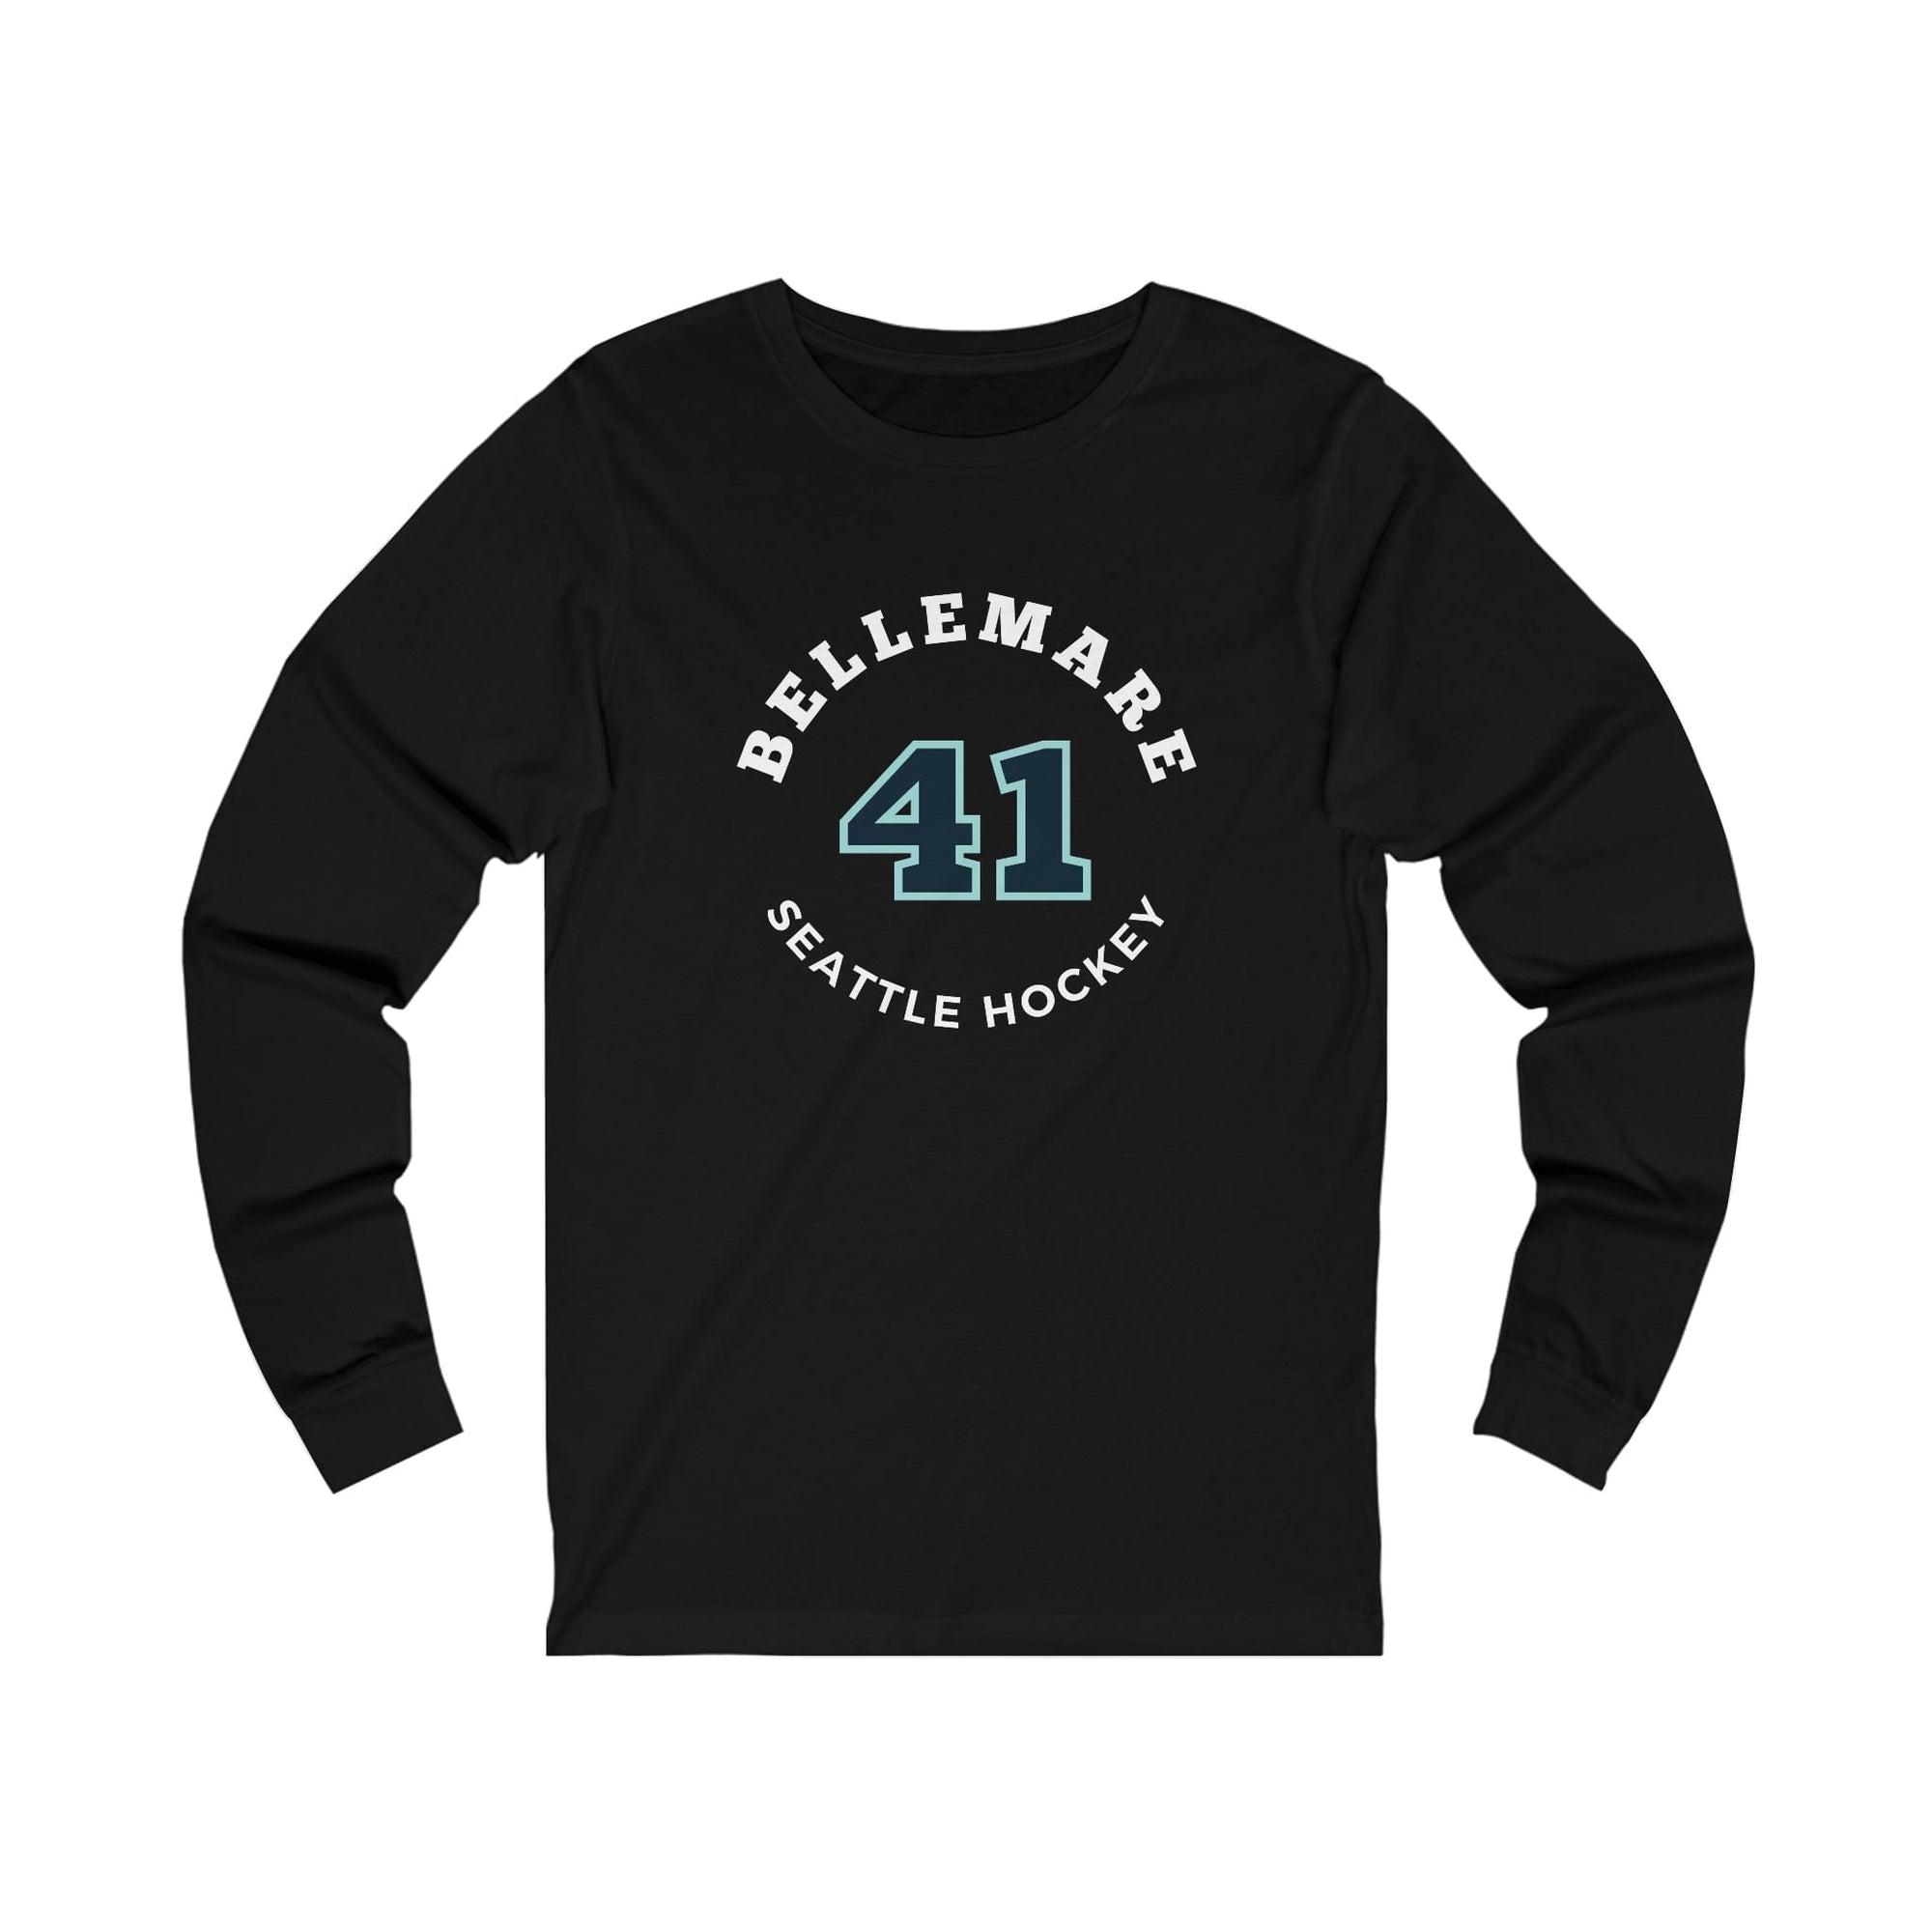 Long-sleeve Bellemare 41 Seattle Hockey Number Arch Design Unisex Jersey Long Sleeve Shirt